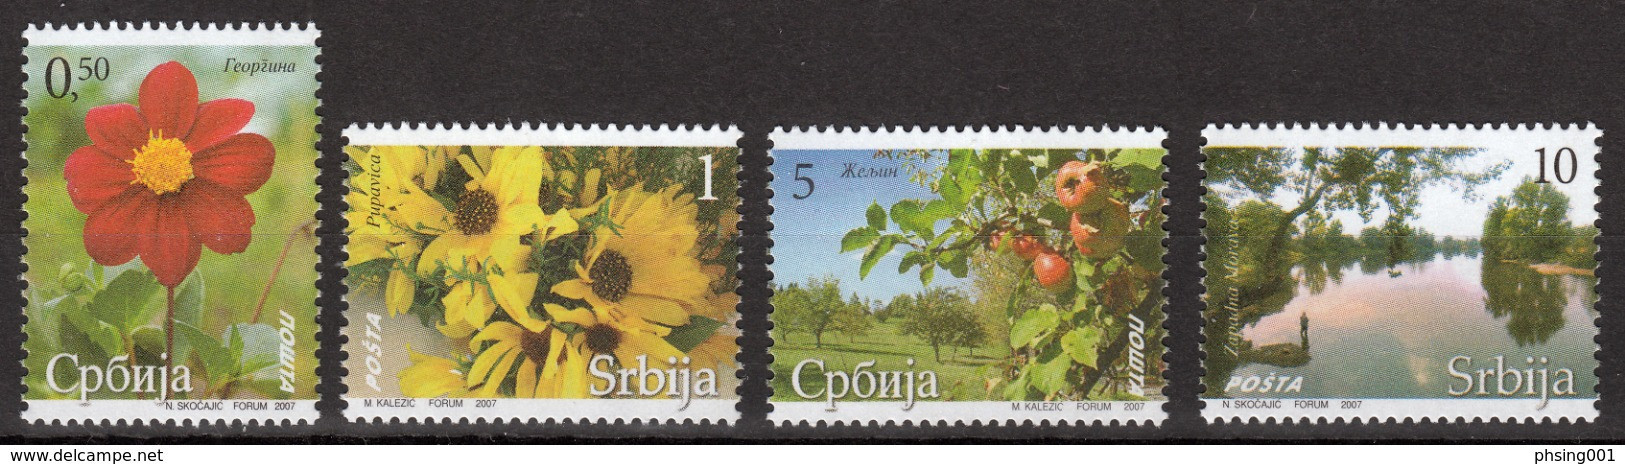 Serbia 2007 Flora Flowers Plants Nature, Definitive Set MNH - Serbia